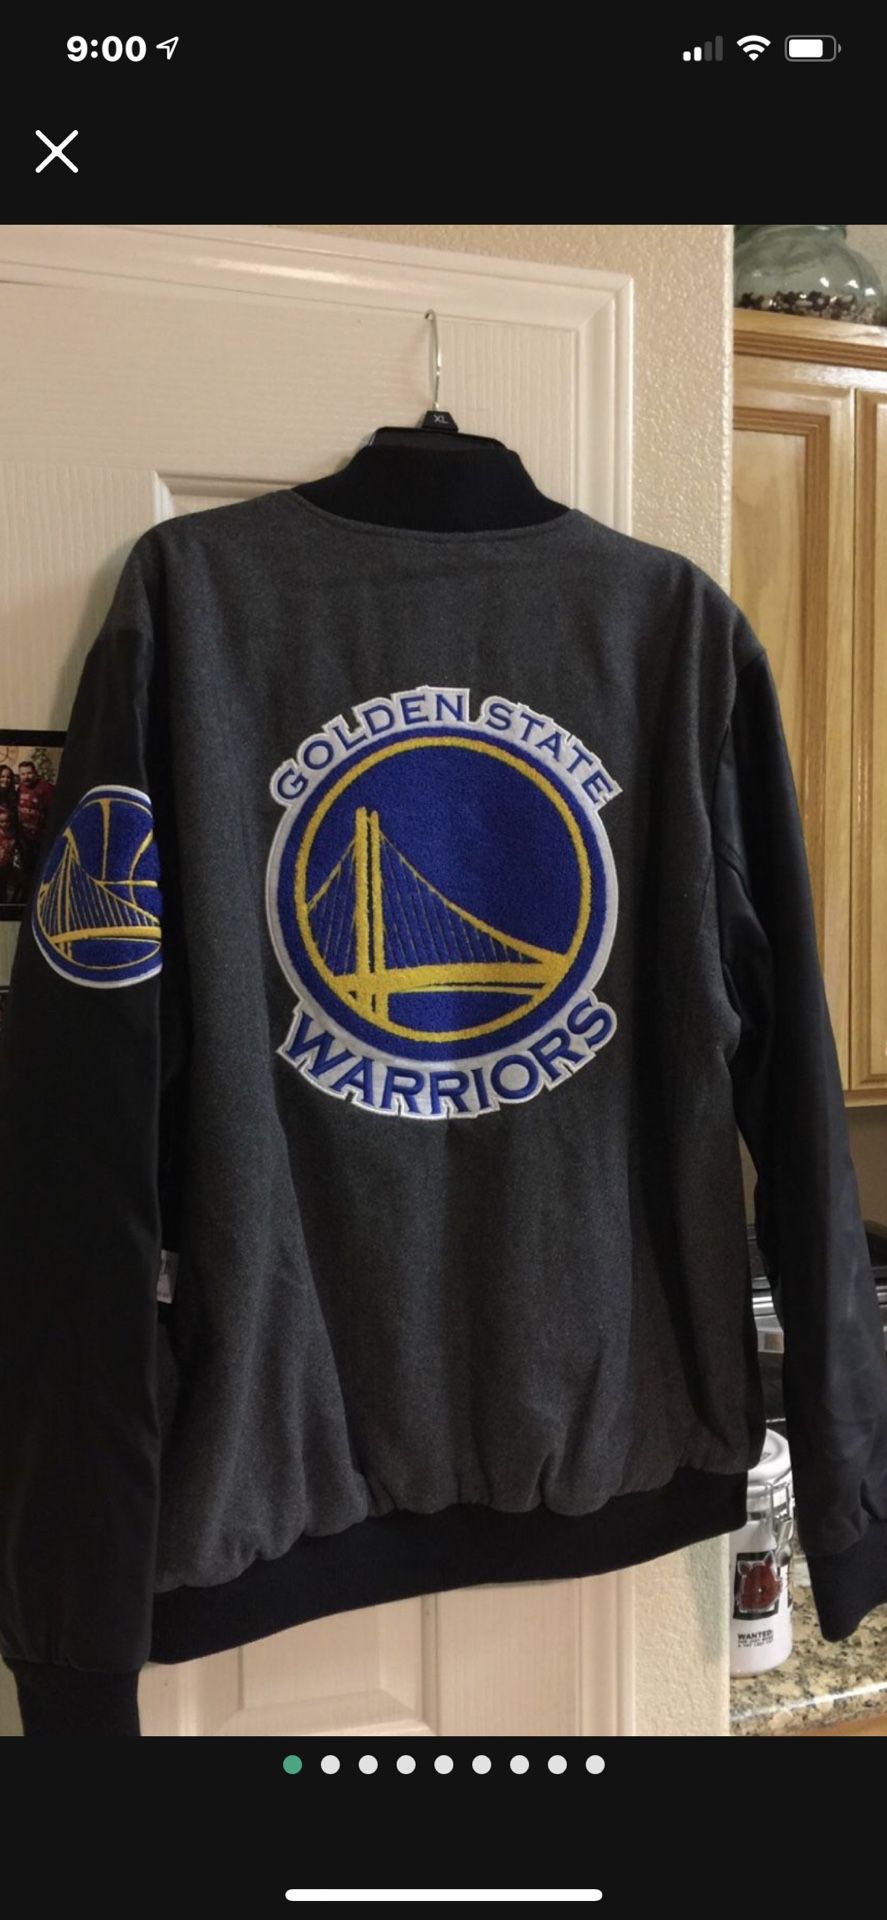 Golden State Warriors NBA Authentic Letterman Jacket Size XL, Retail $150